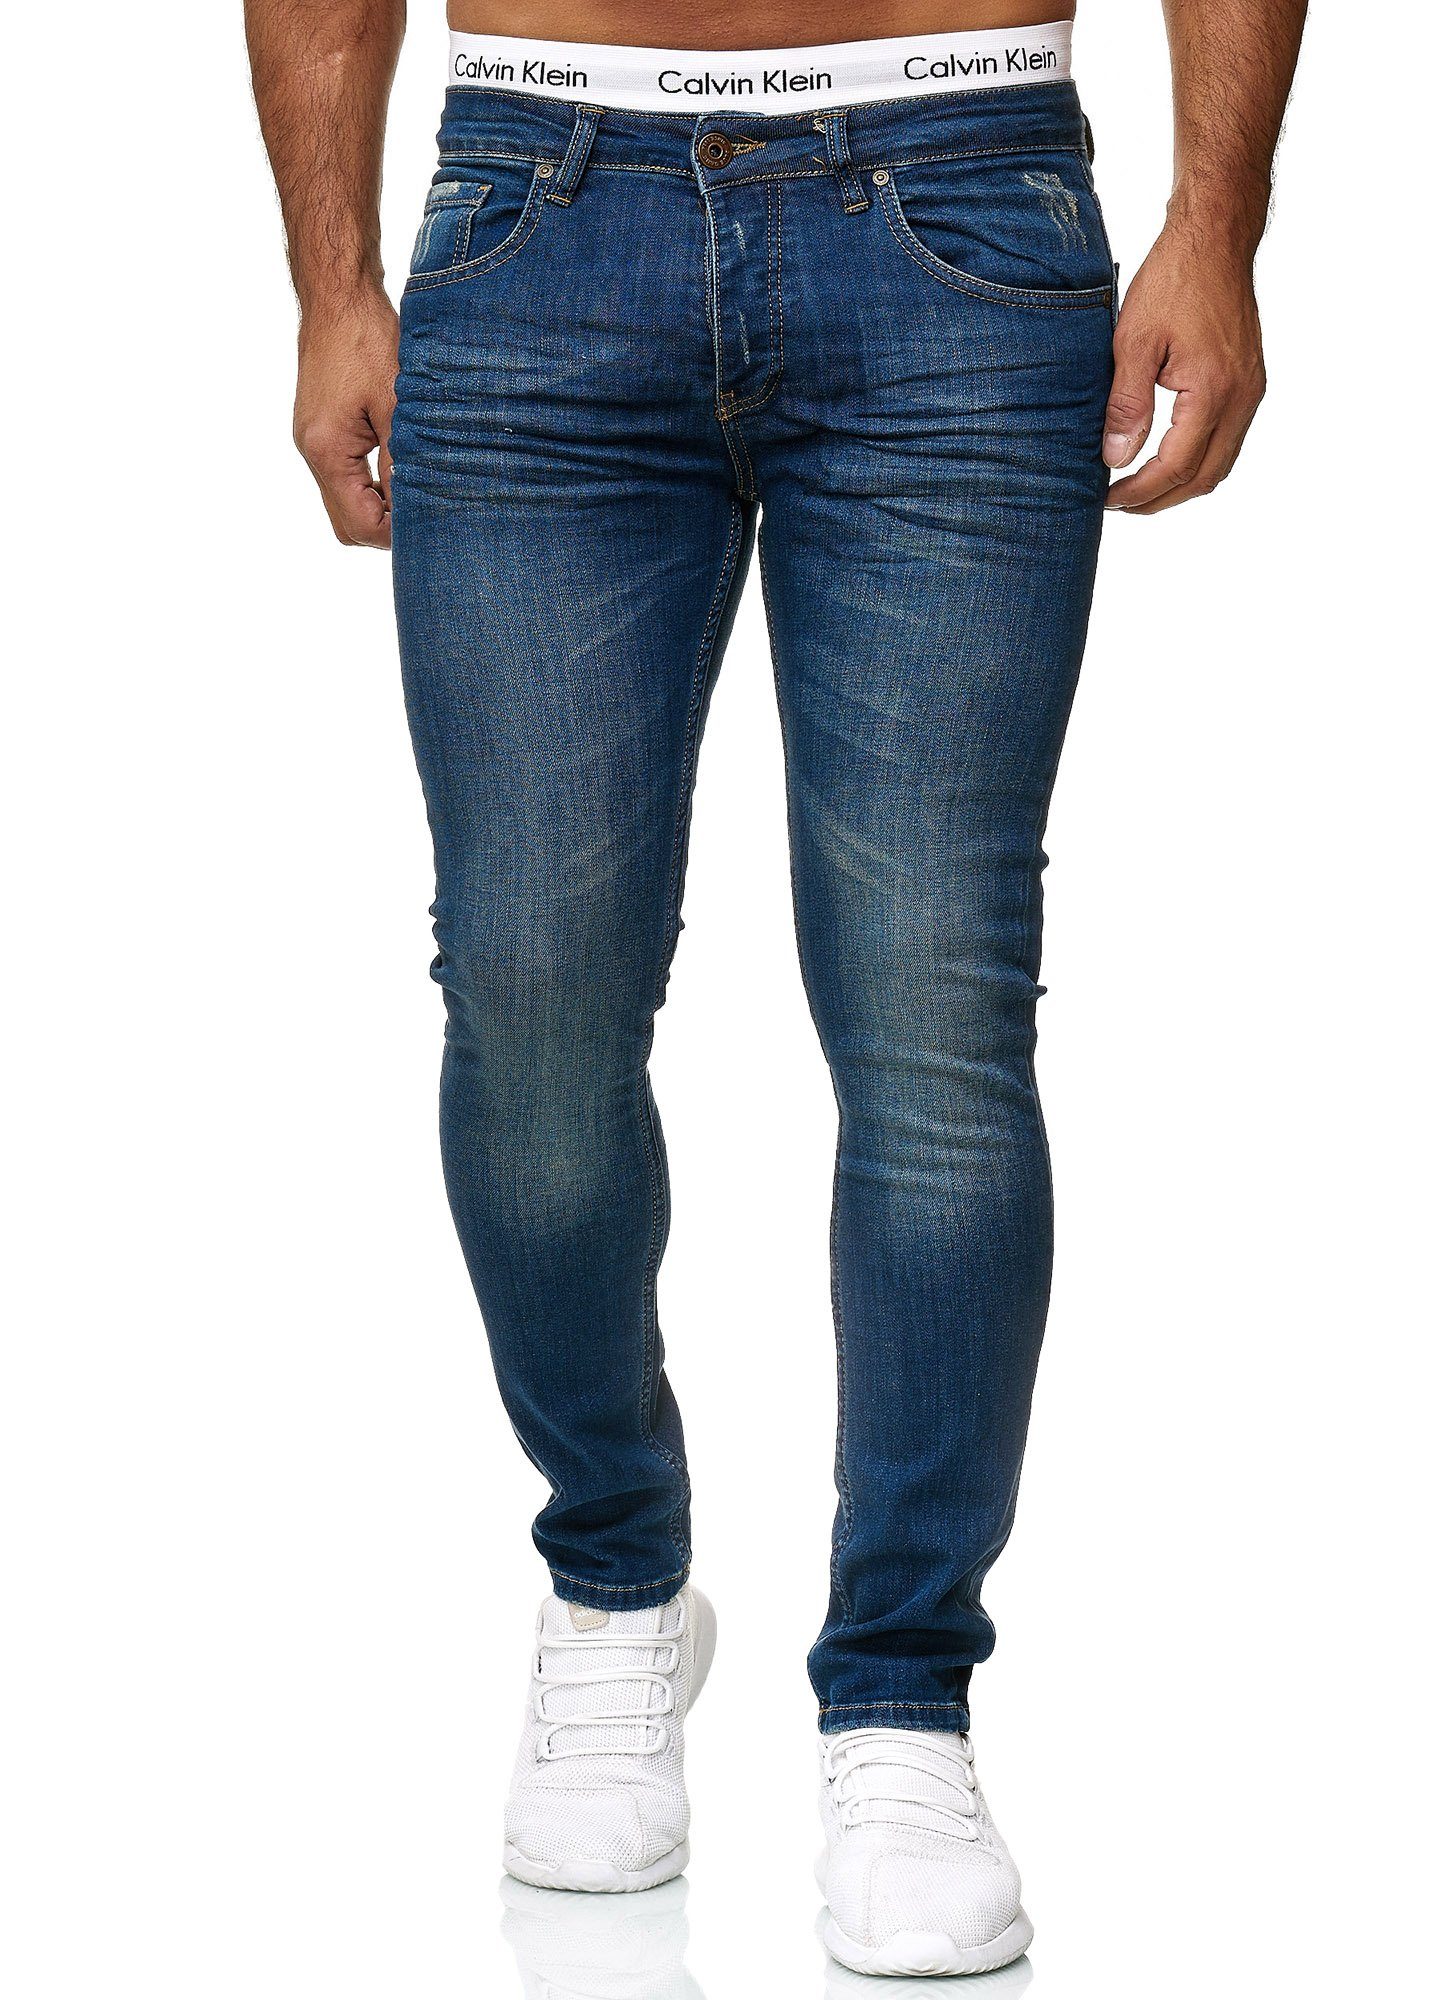 Blue 600JS (Jeanshose Freizeit 608 Heavy 1-tlg) Business Bootcut, Casual Straight-Jeans Used OneRedox Designerjeans